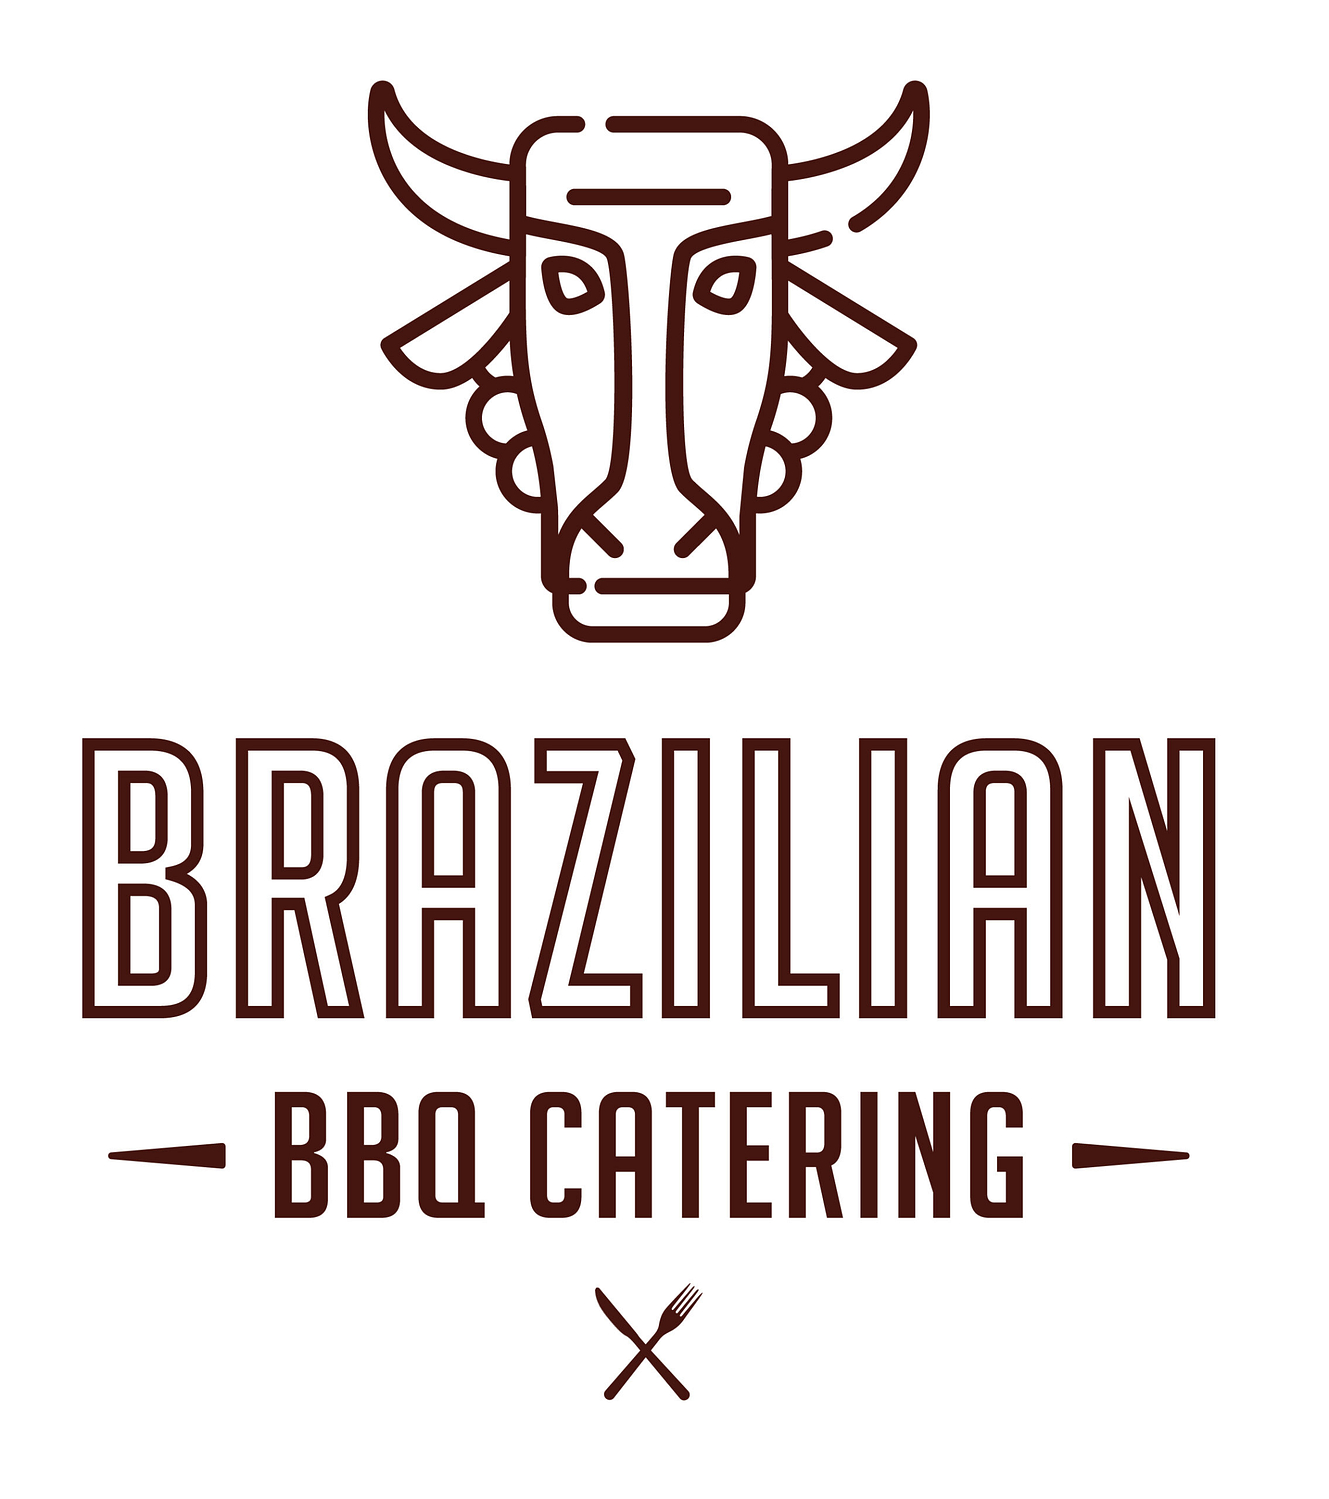 Brazillian BBQ Catering - LOGO - CMYK 1 COLOUR